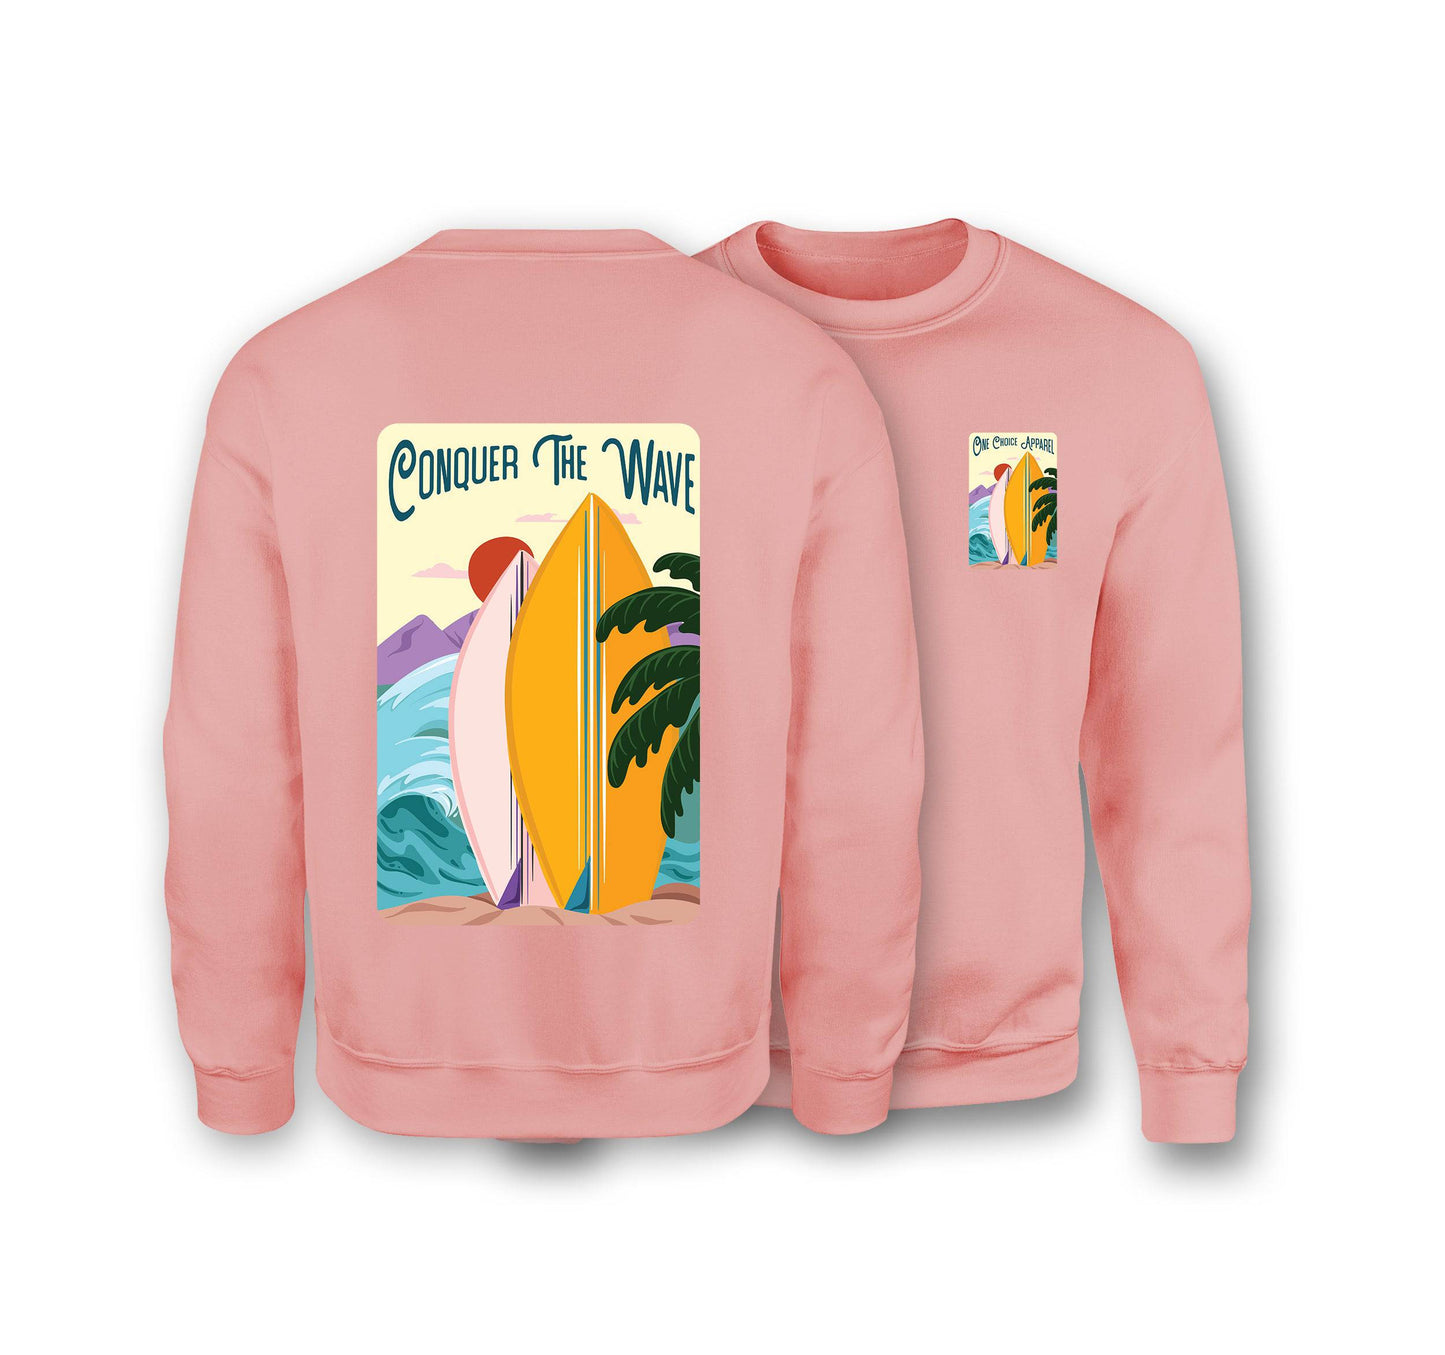 Conquer The Wave Sweatshirt - Organic Cotton Sweatshirt - One Choice Apparel